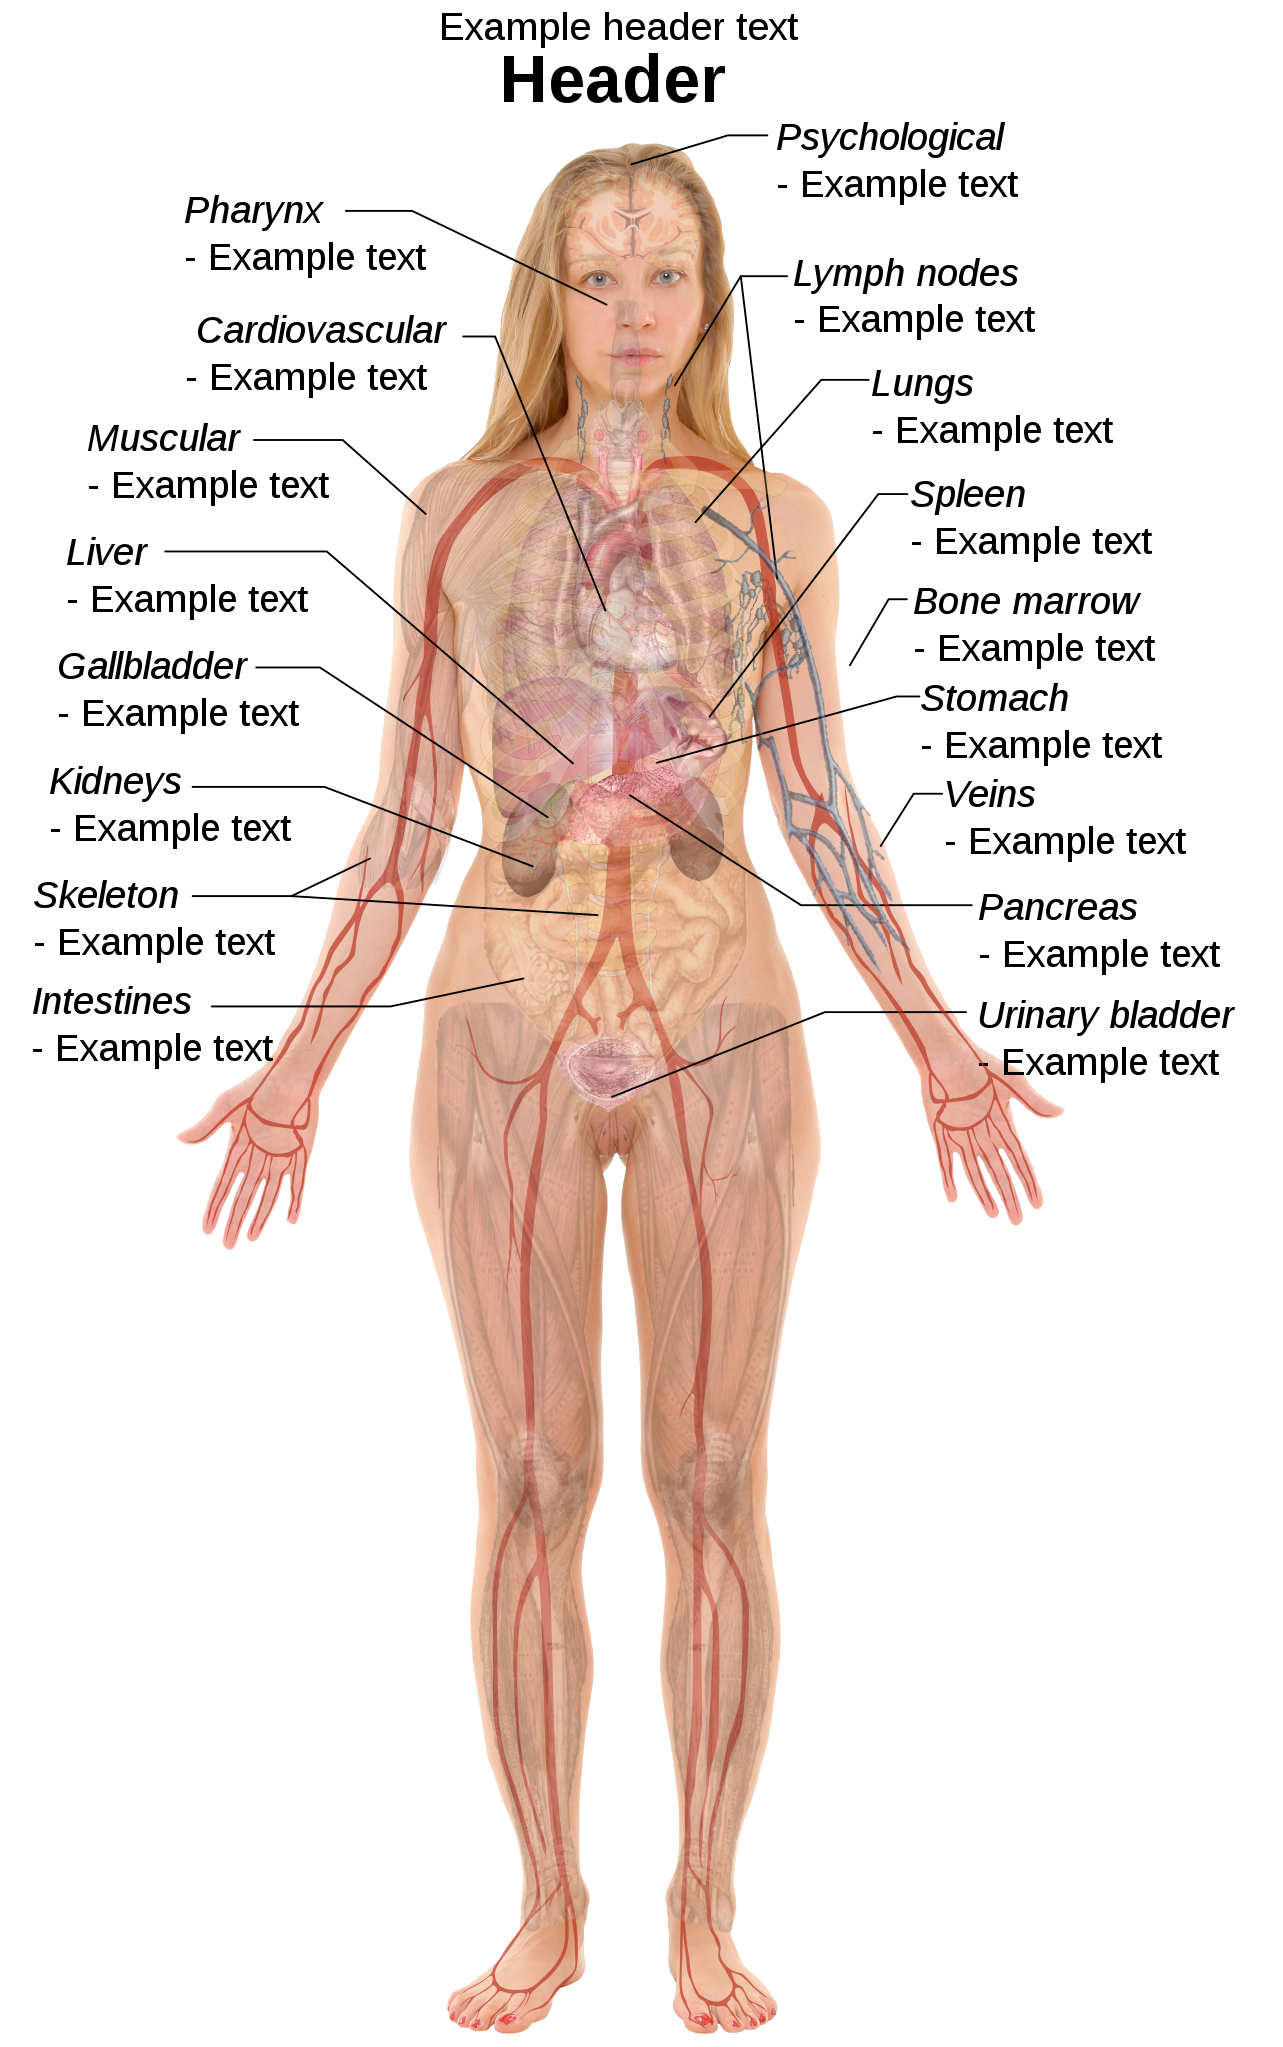 girl image of their female body